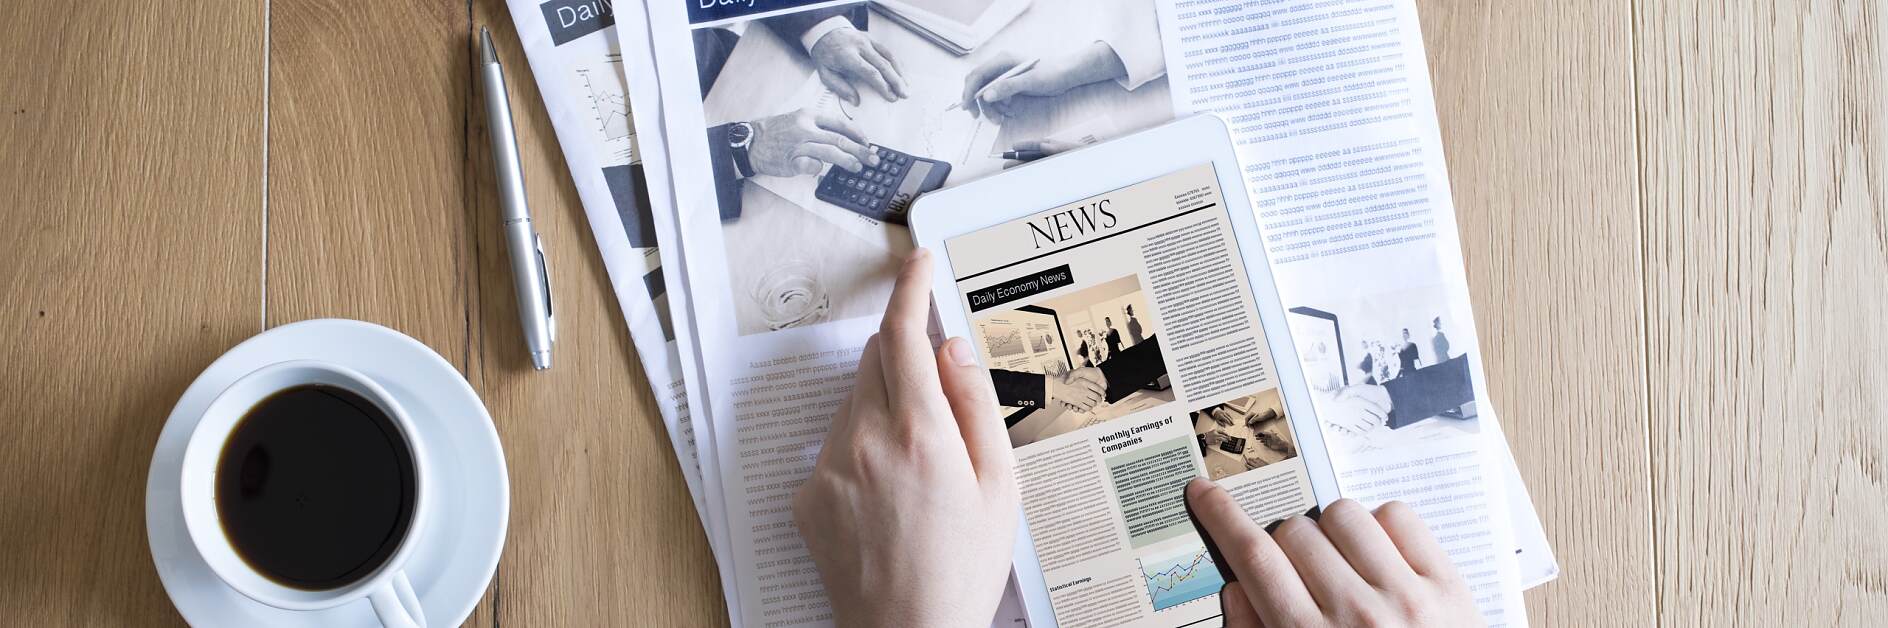 Avis-iPad-kombination, papir og tryk